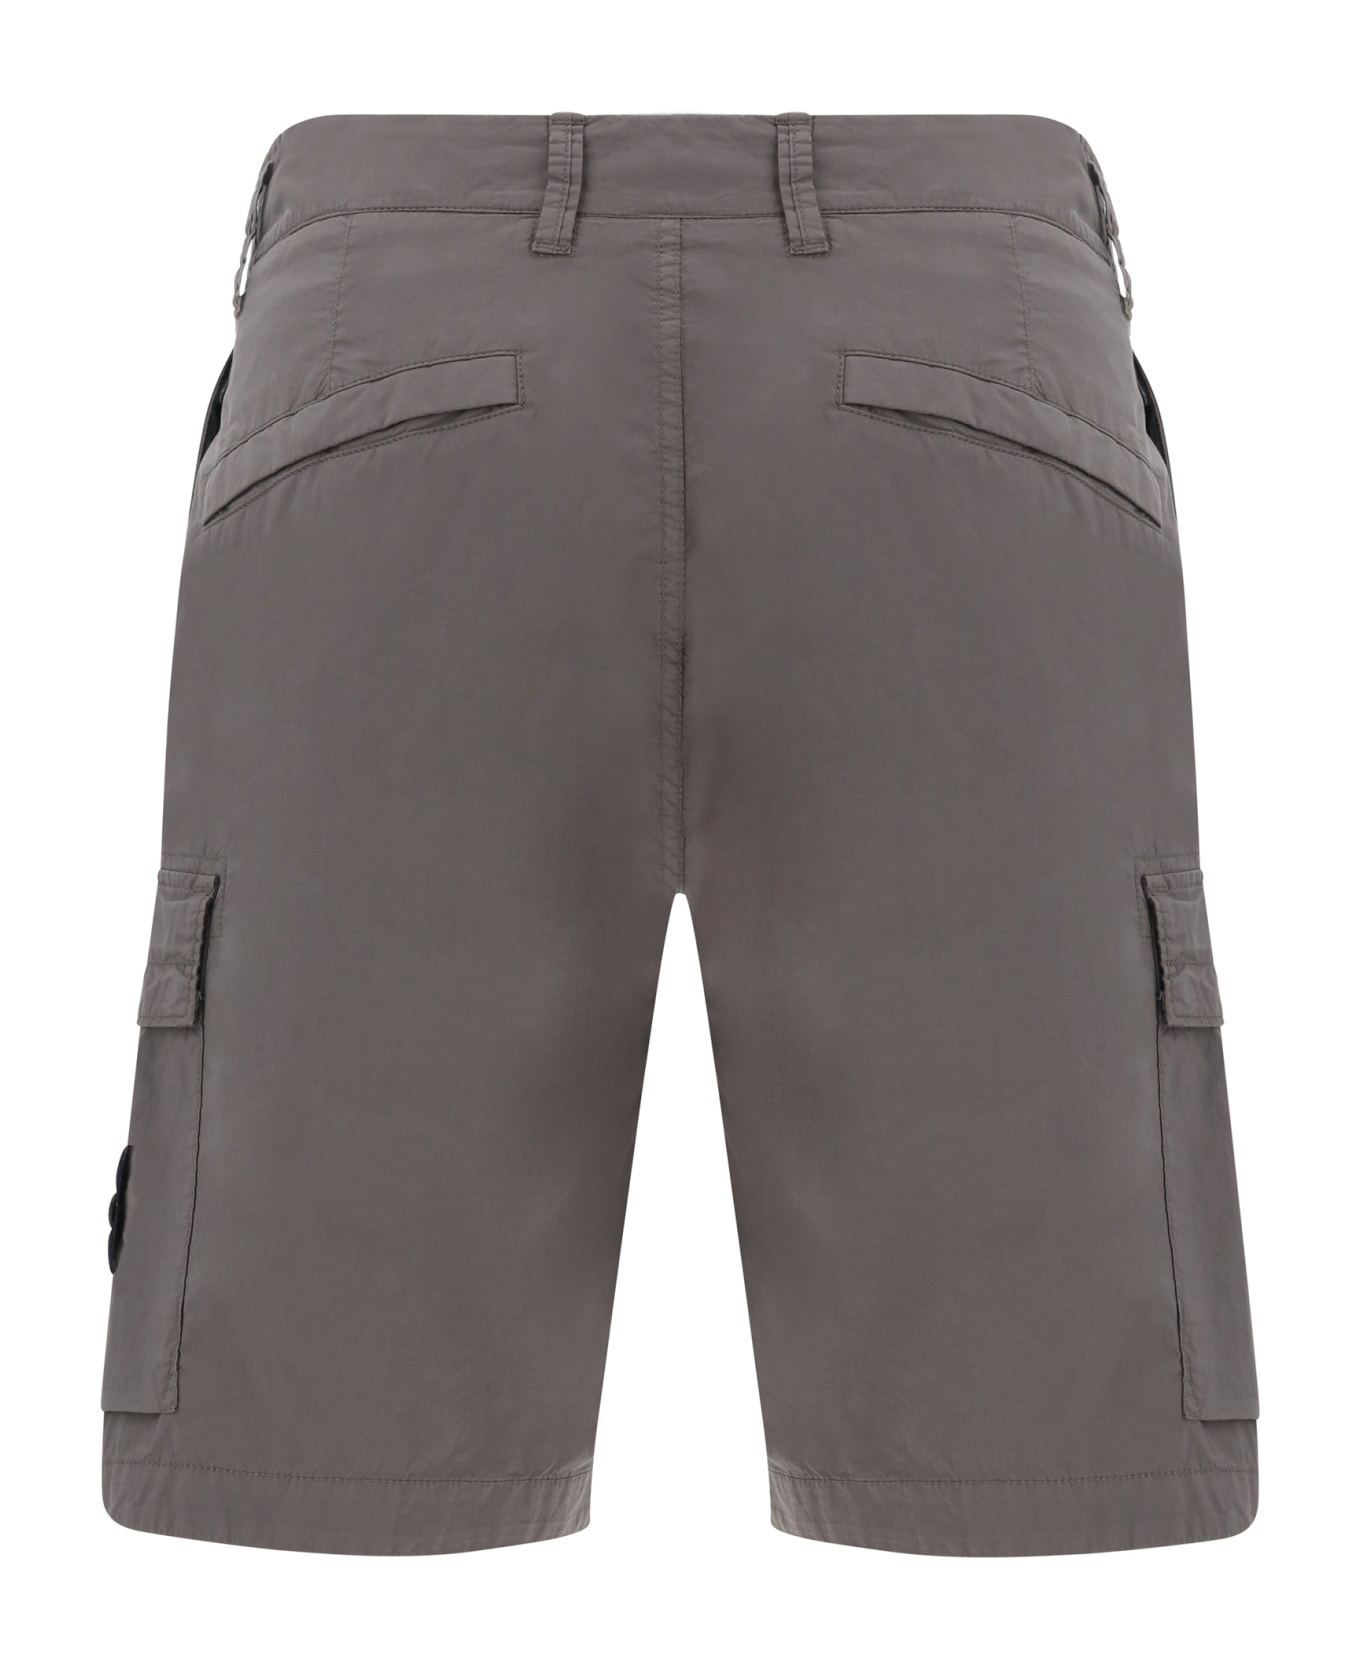 Stone Island Cotton Cargo Shorts - Tortora